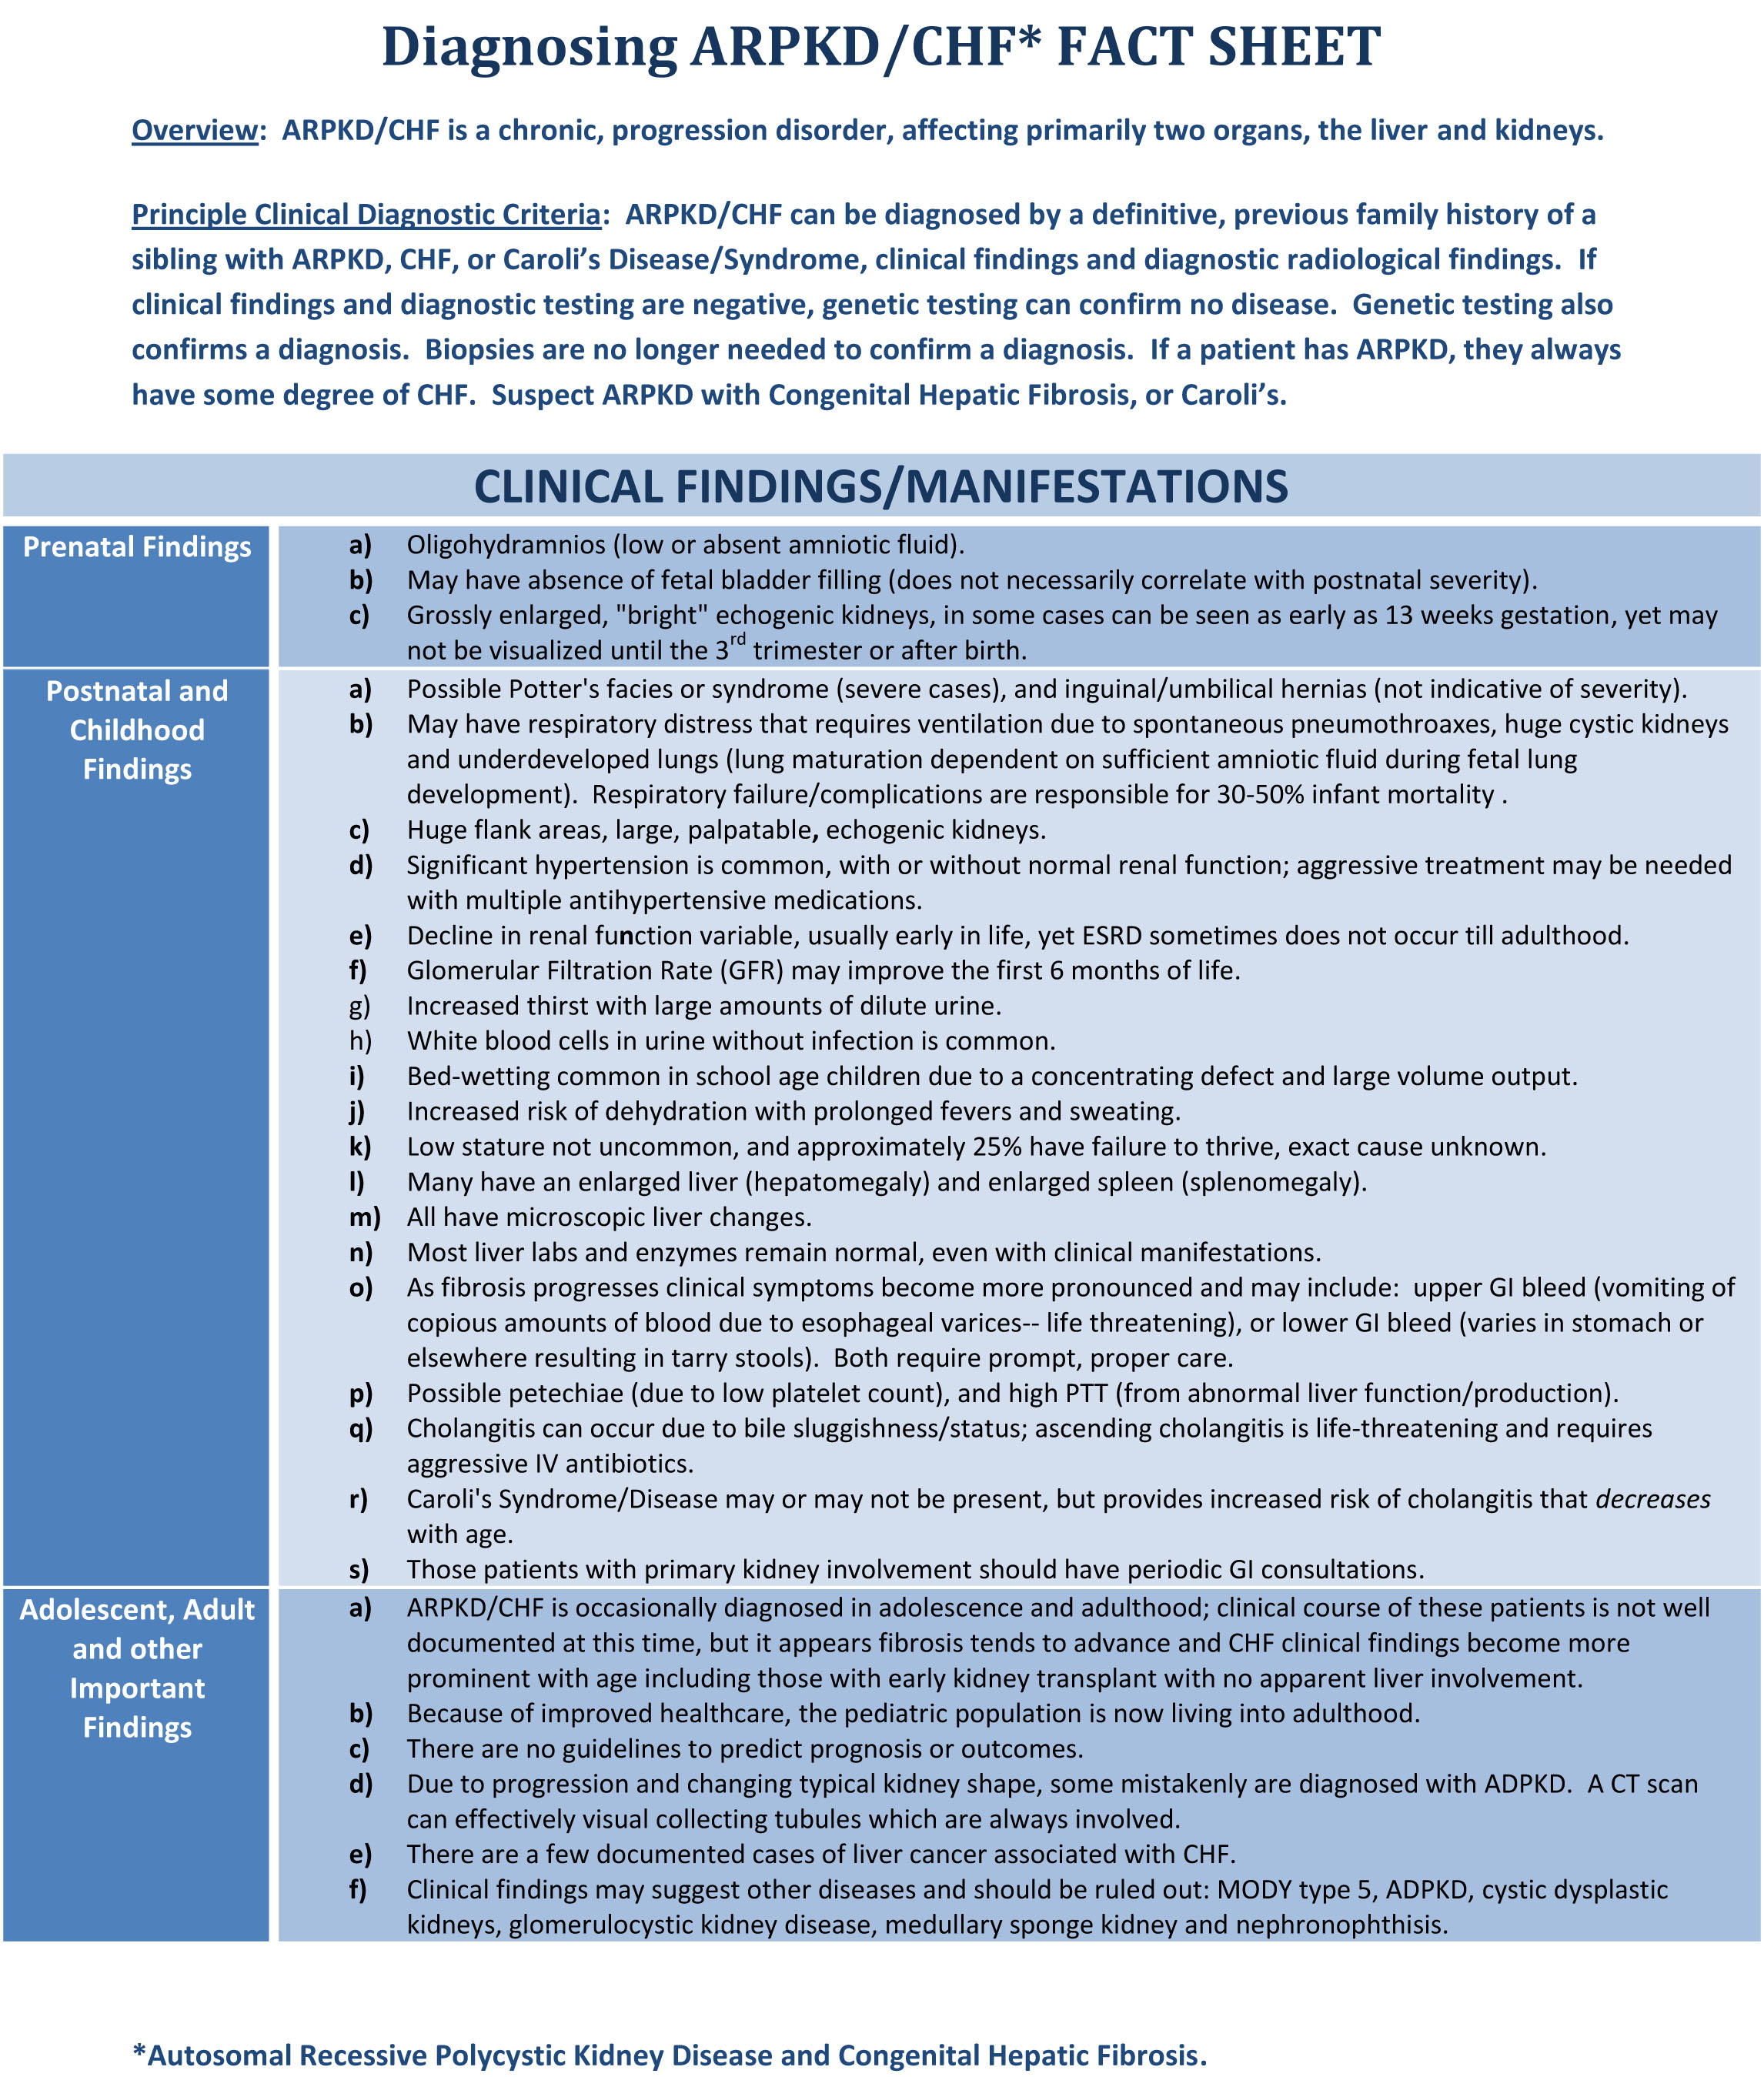 Diagnosing ARPKD/CHF Fact Sheet